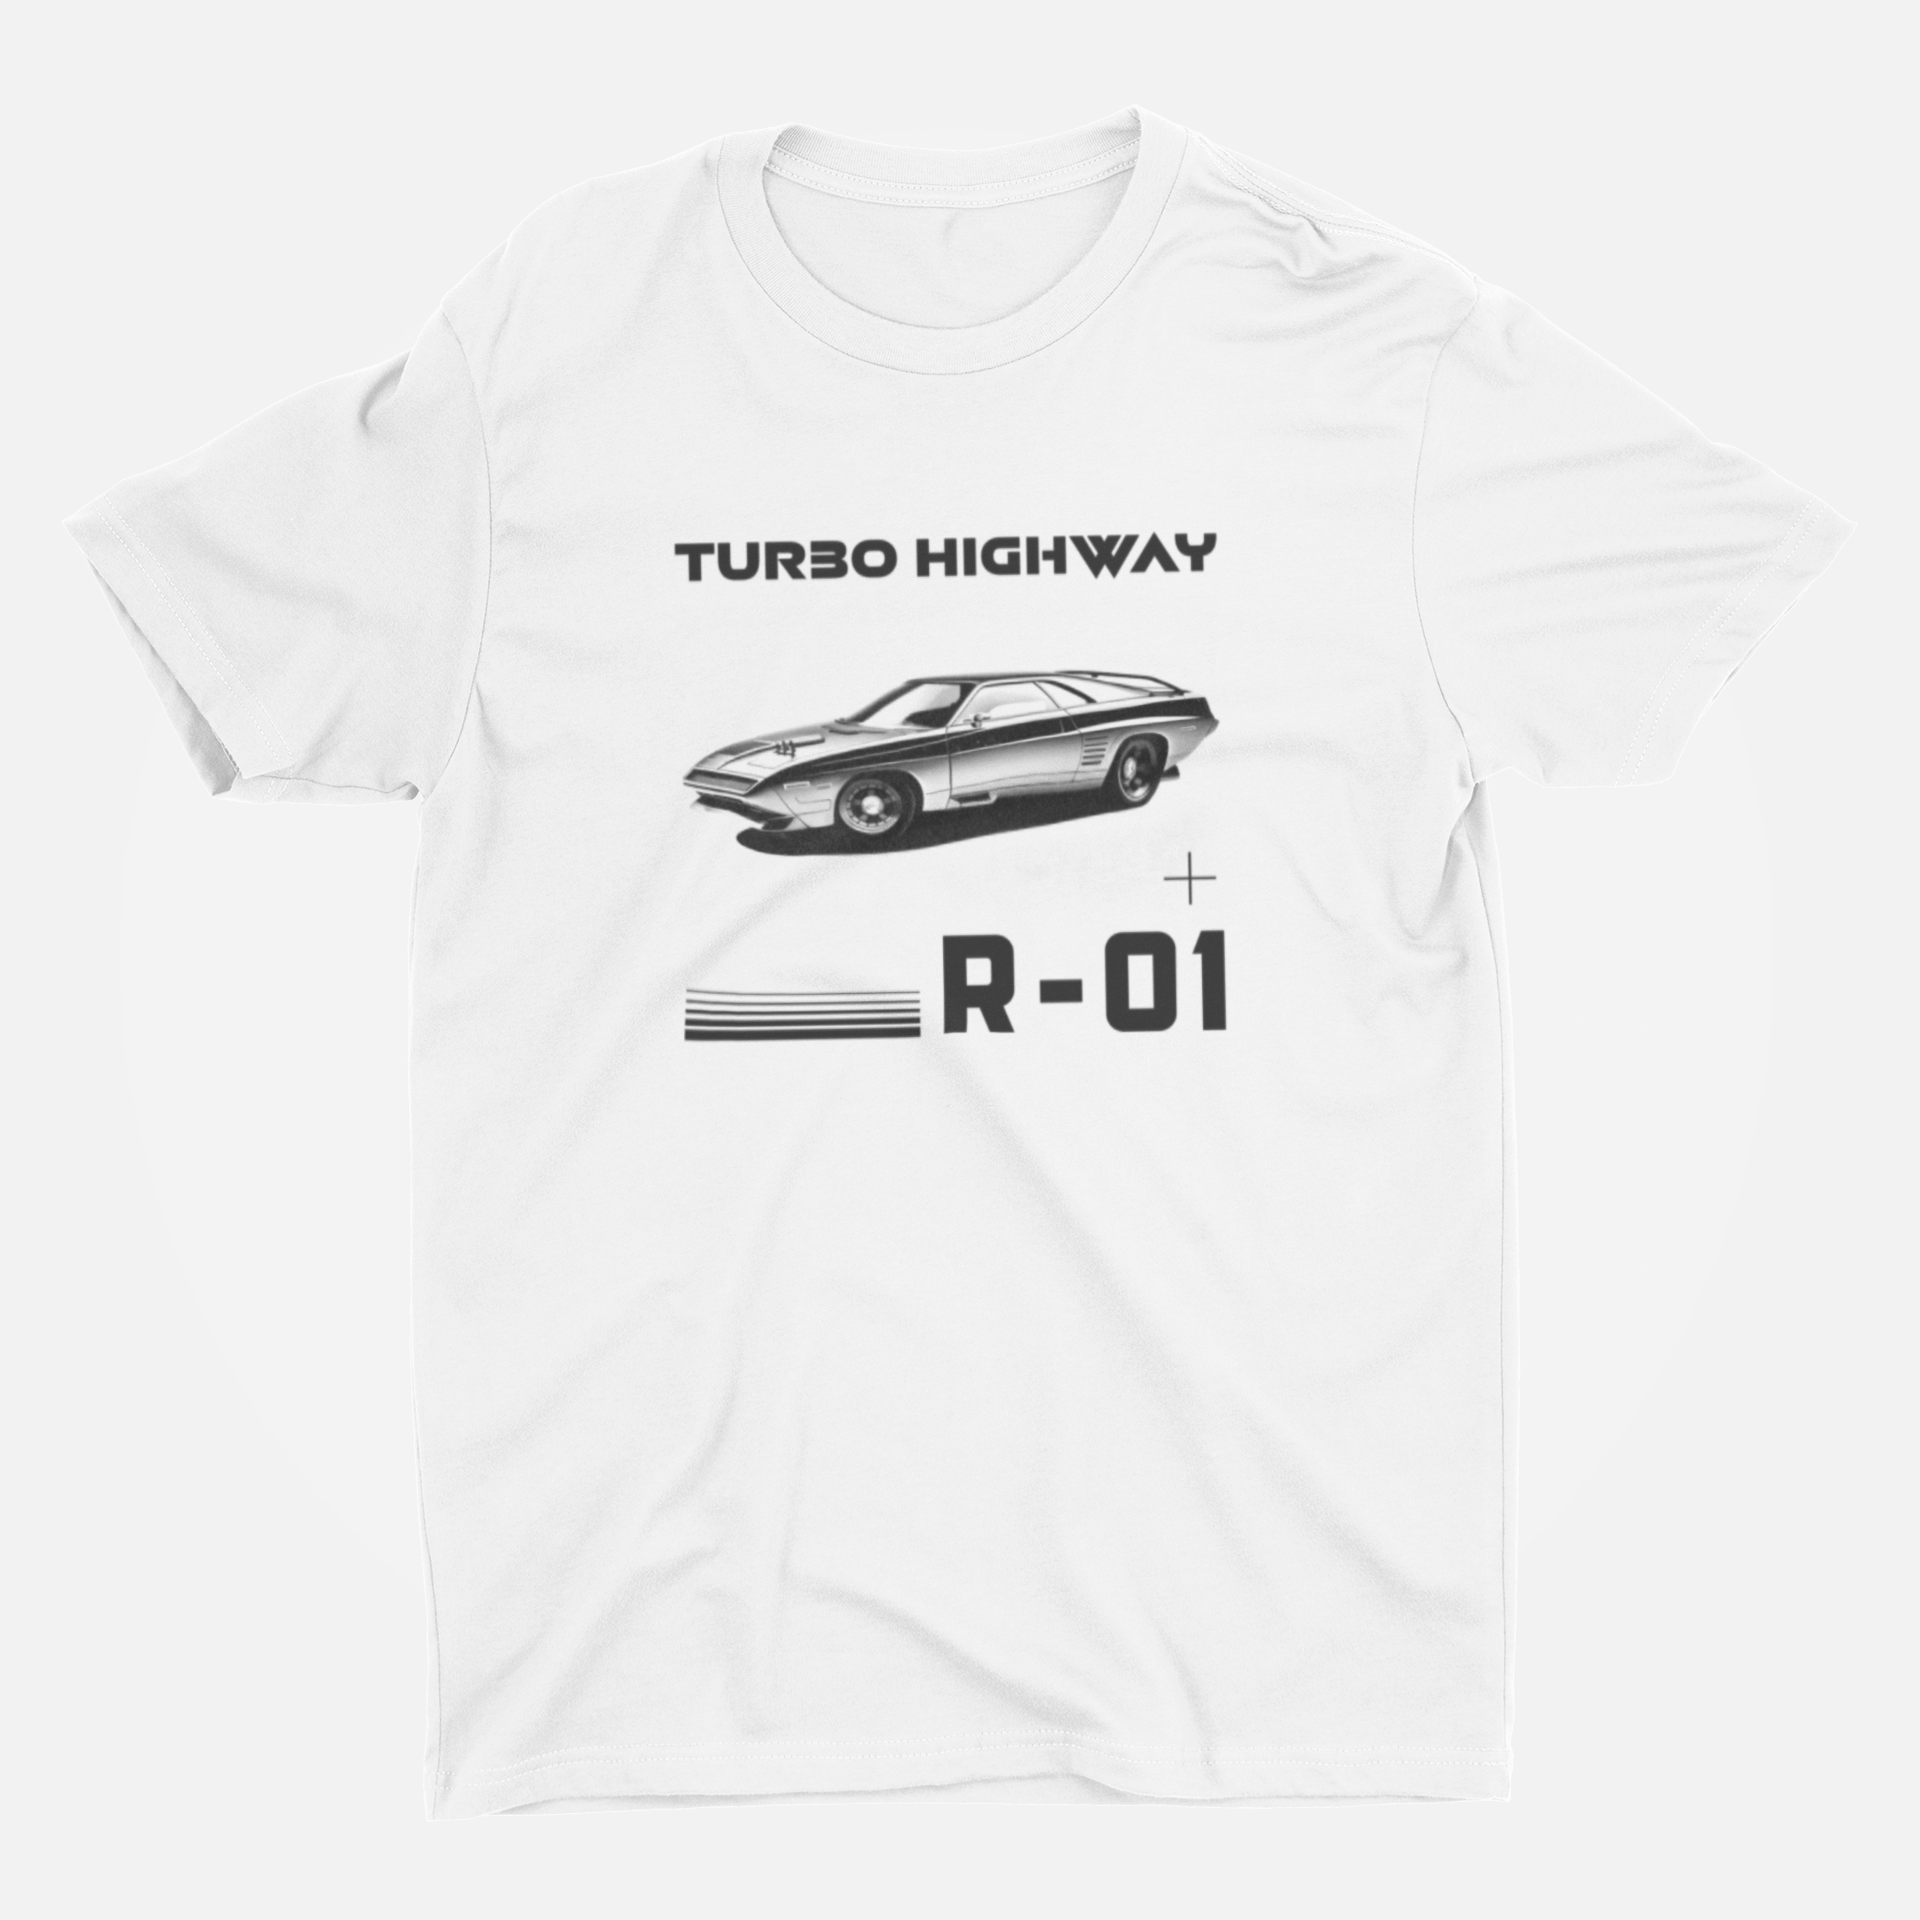 Turbo Highway Vintage Car White Round Neck T-Shirt for Men. 